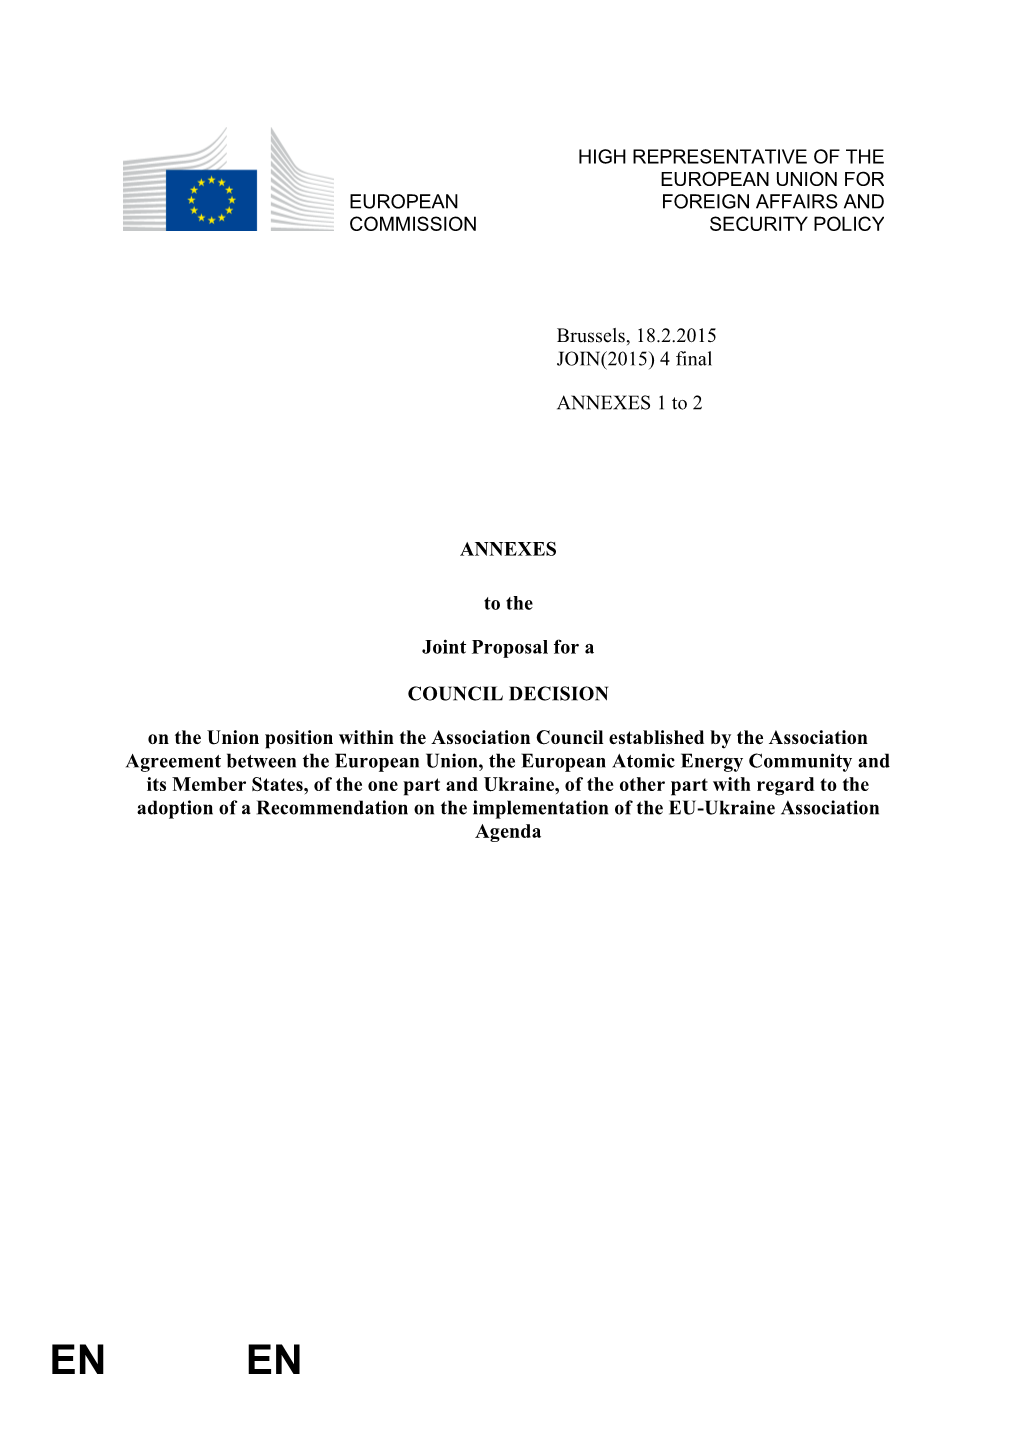 On the Implementation of the EU-Ukraine Association Agenda